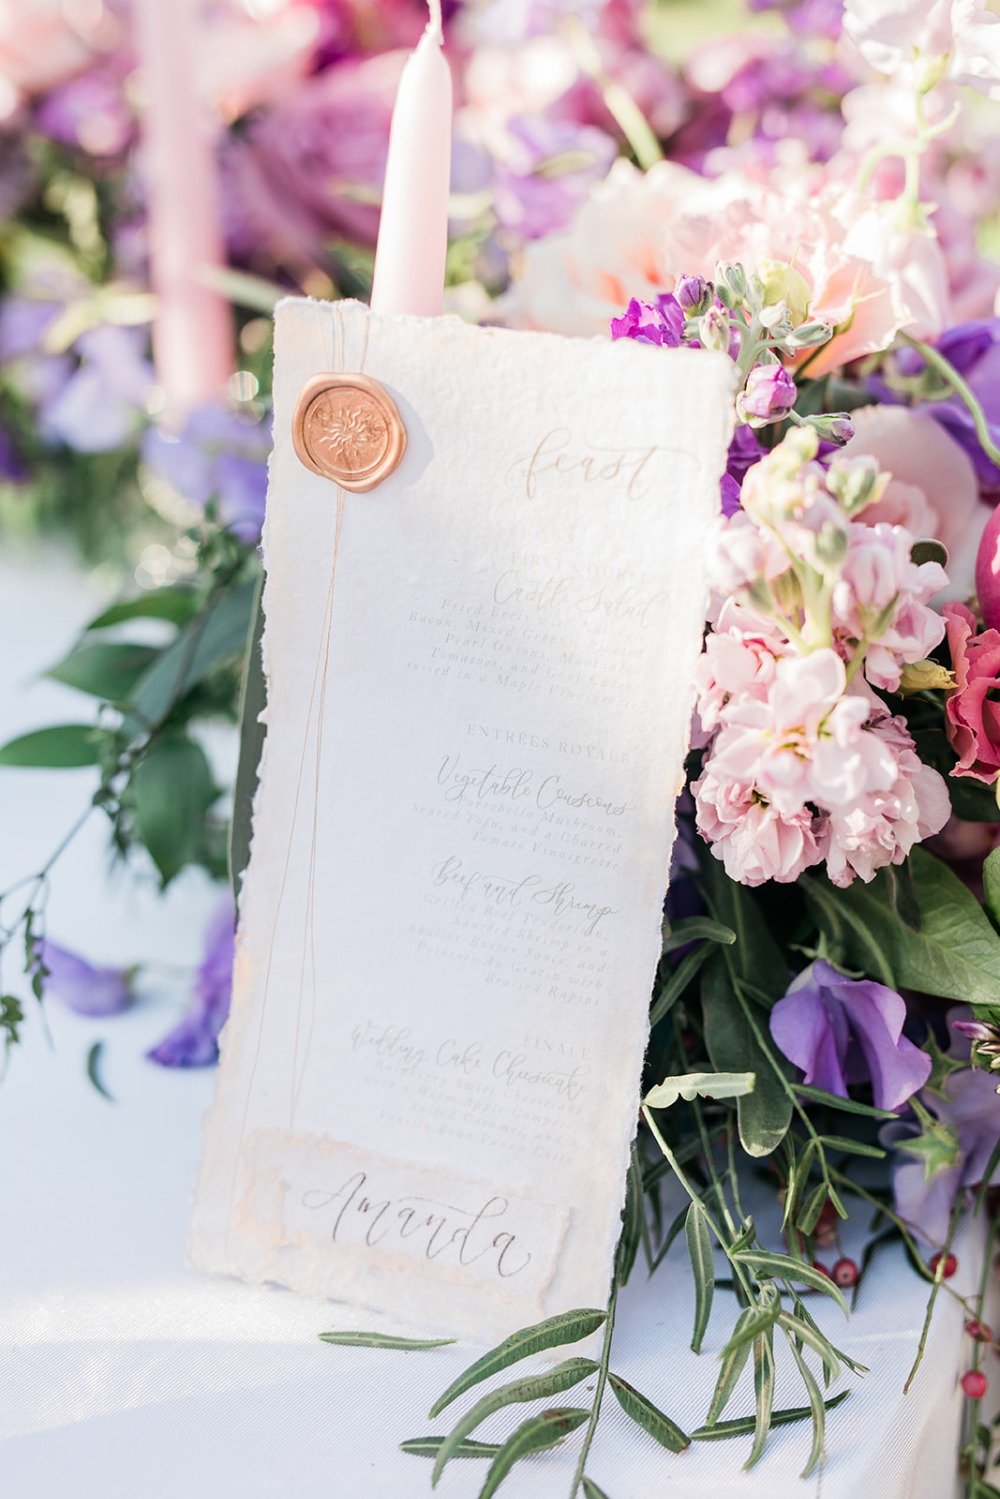 wedding menu with romantic calligraphy